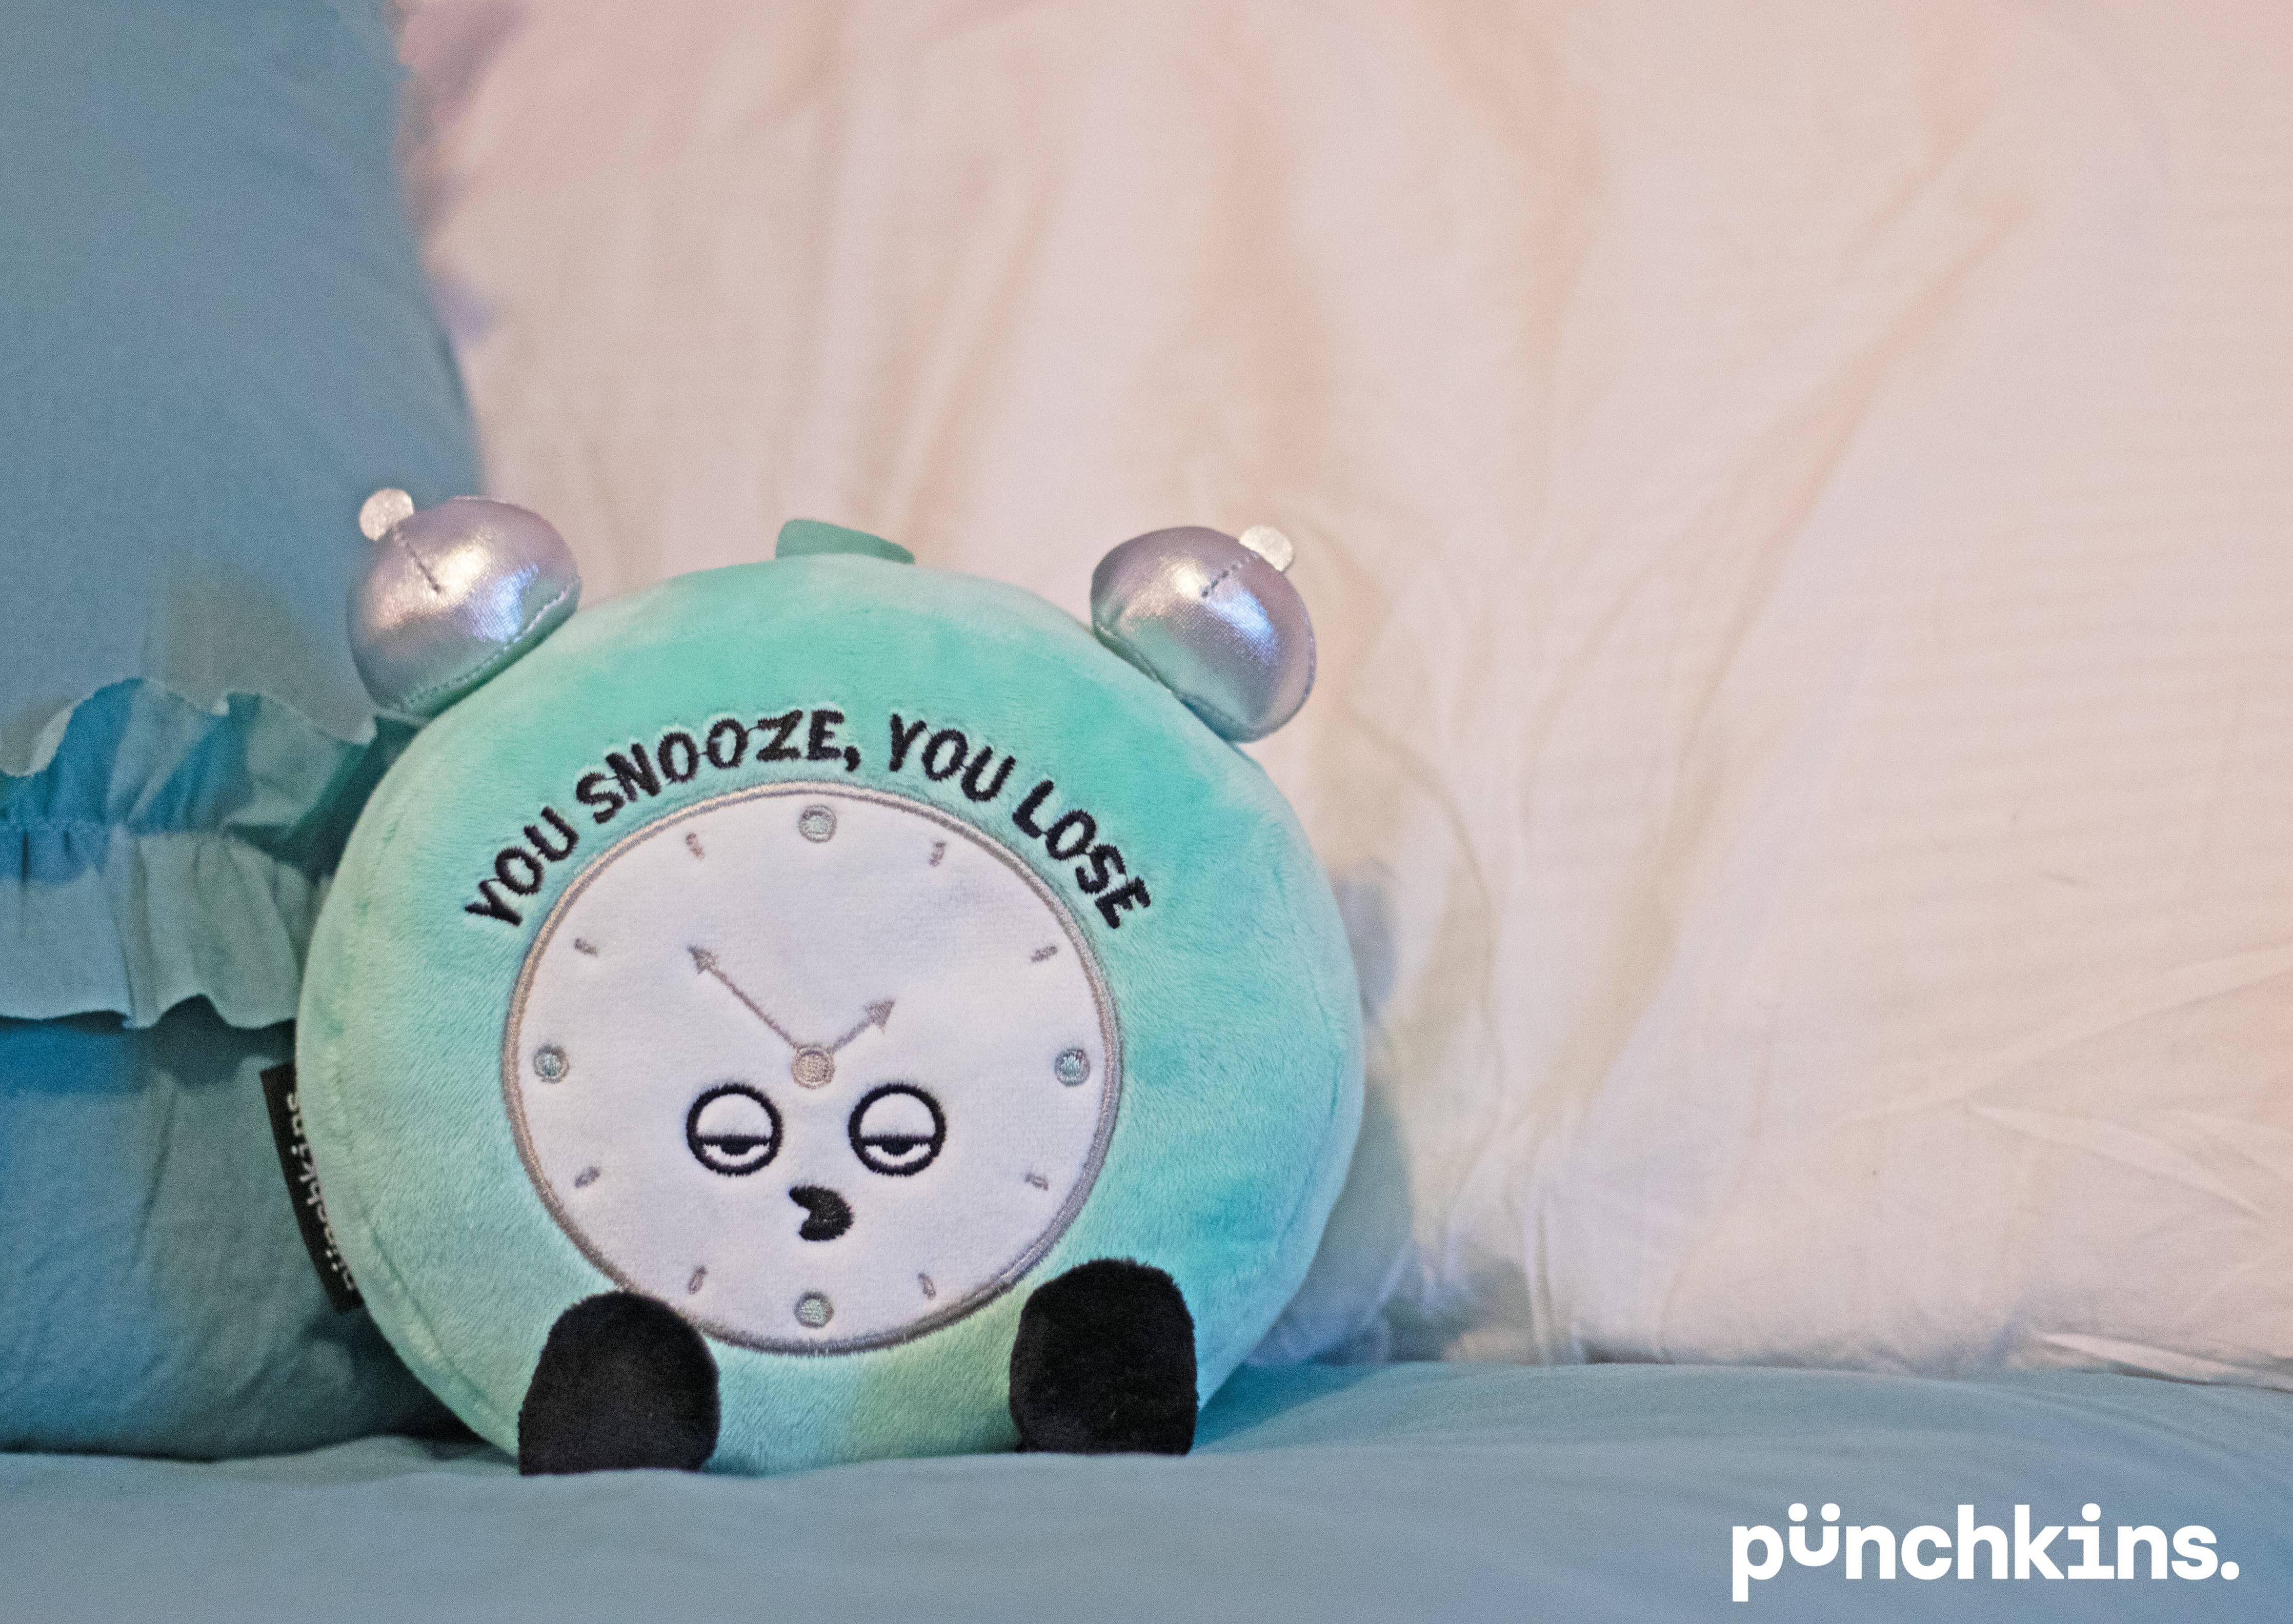 Punchkins "You Snooze, You Lose" Plush Clock Kawaii Gifts